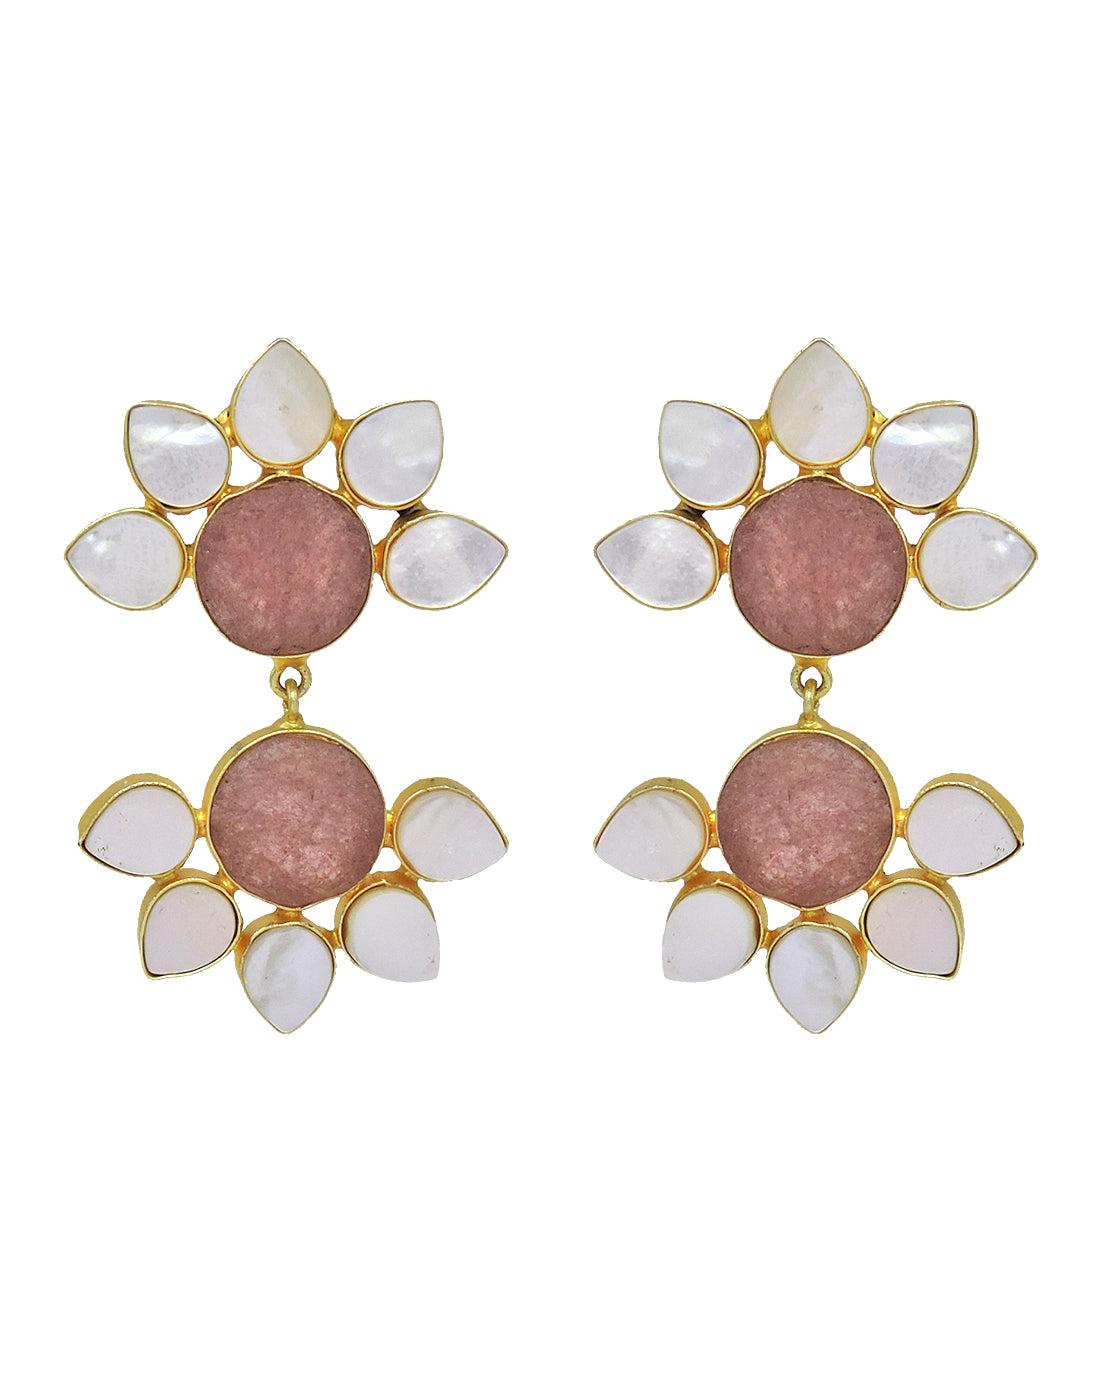 Twin Flora Earrings (Quartz) - Statement Earrings - Gold-Plated & Hypoallergenic Jewellery - Made in India - Dubai Jewellery - Dori